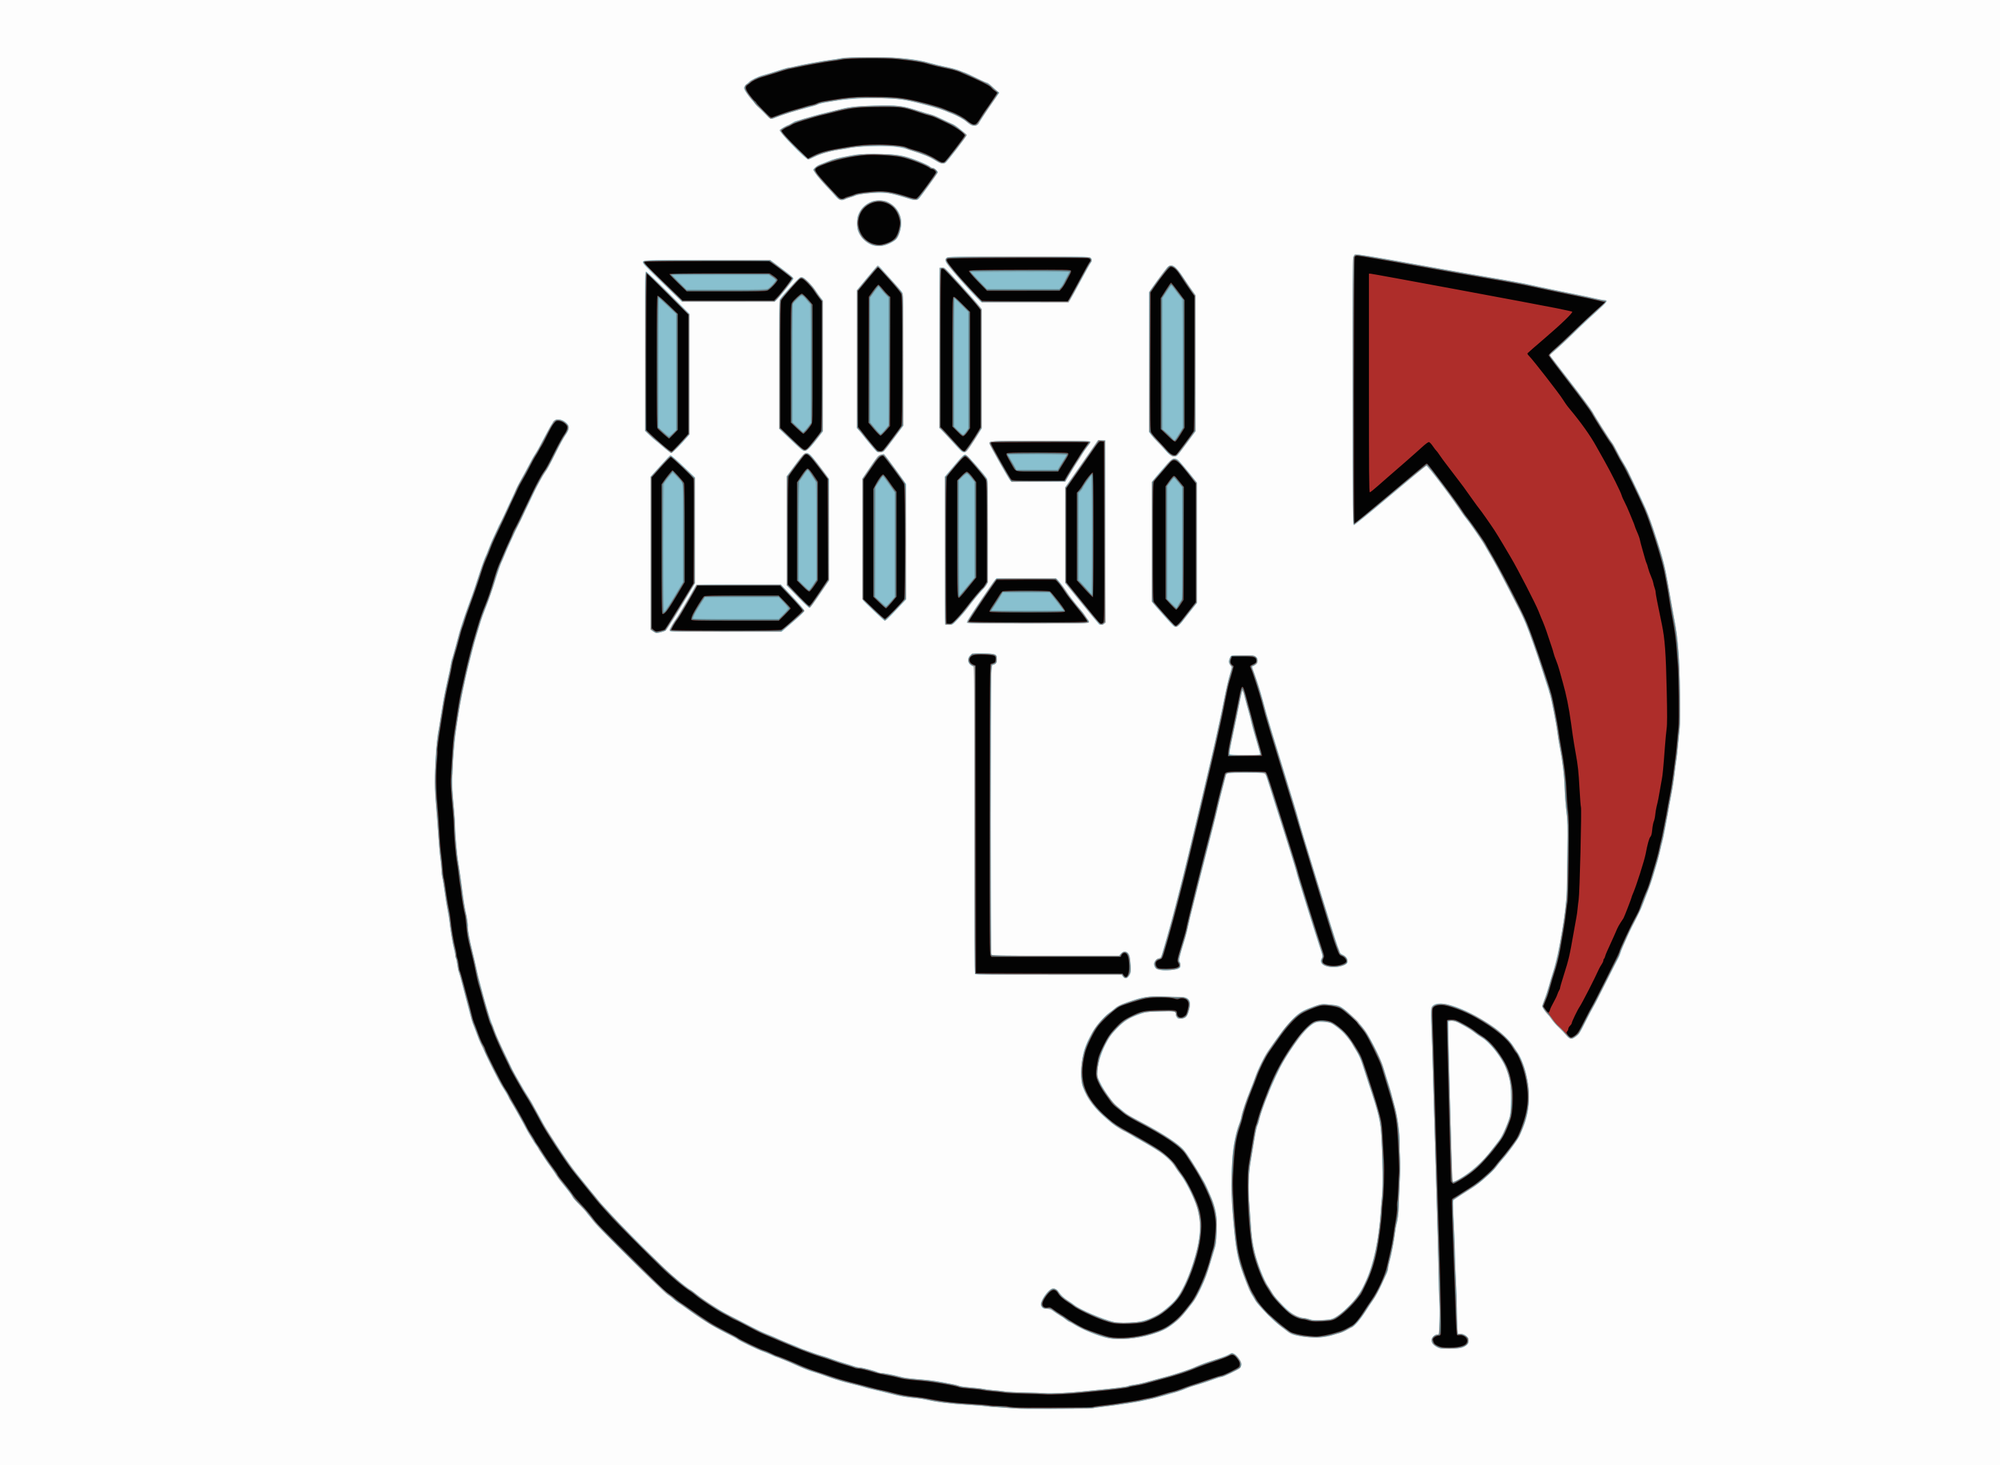 Projekt Digi-LA-SOP im März gestartet